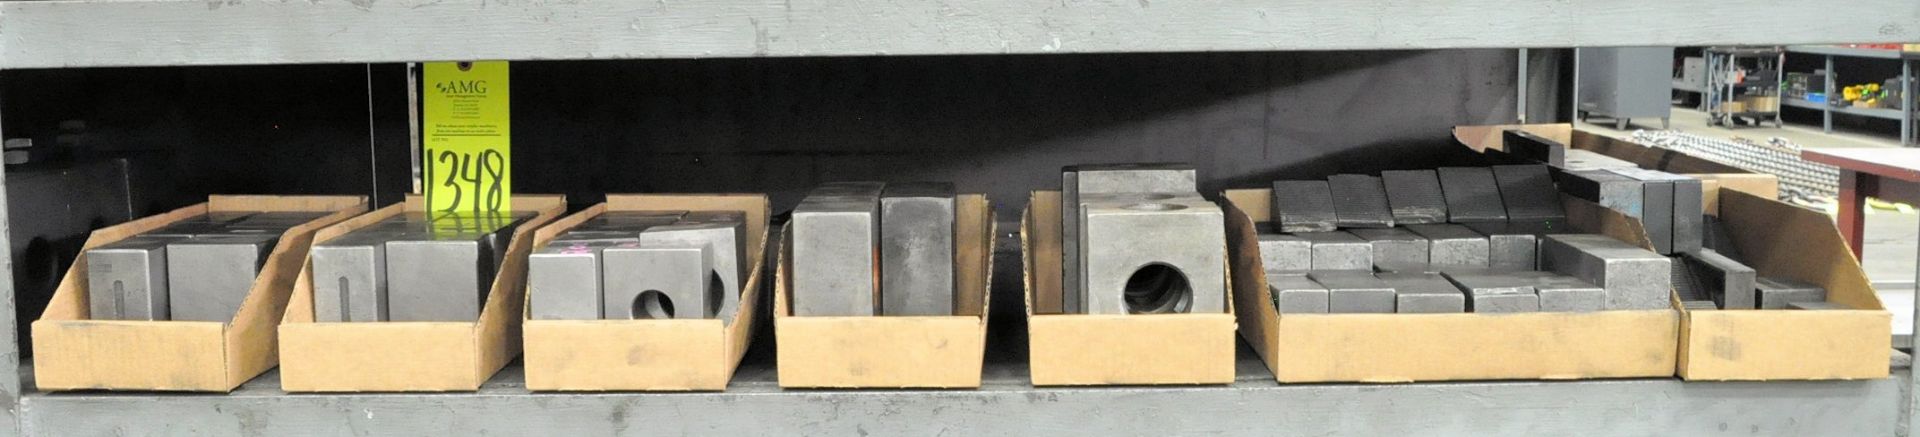 Lot-Setup Blocks in (8) Boxes on (1) Shelf, (F-17), (Yellow Tag)